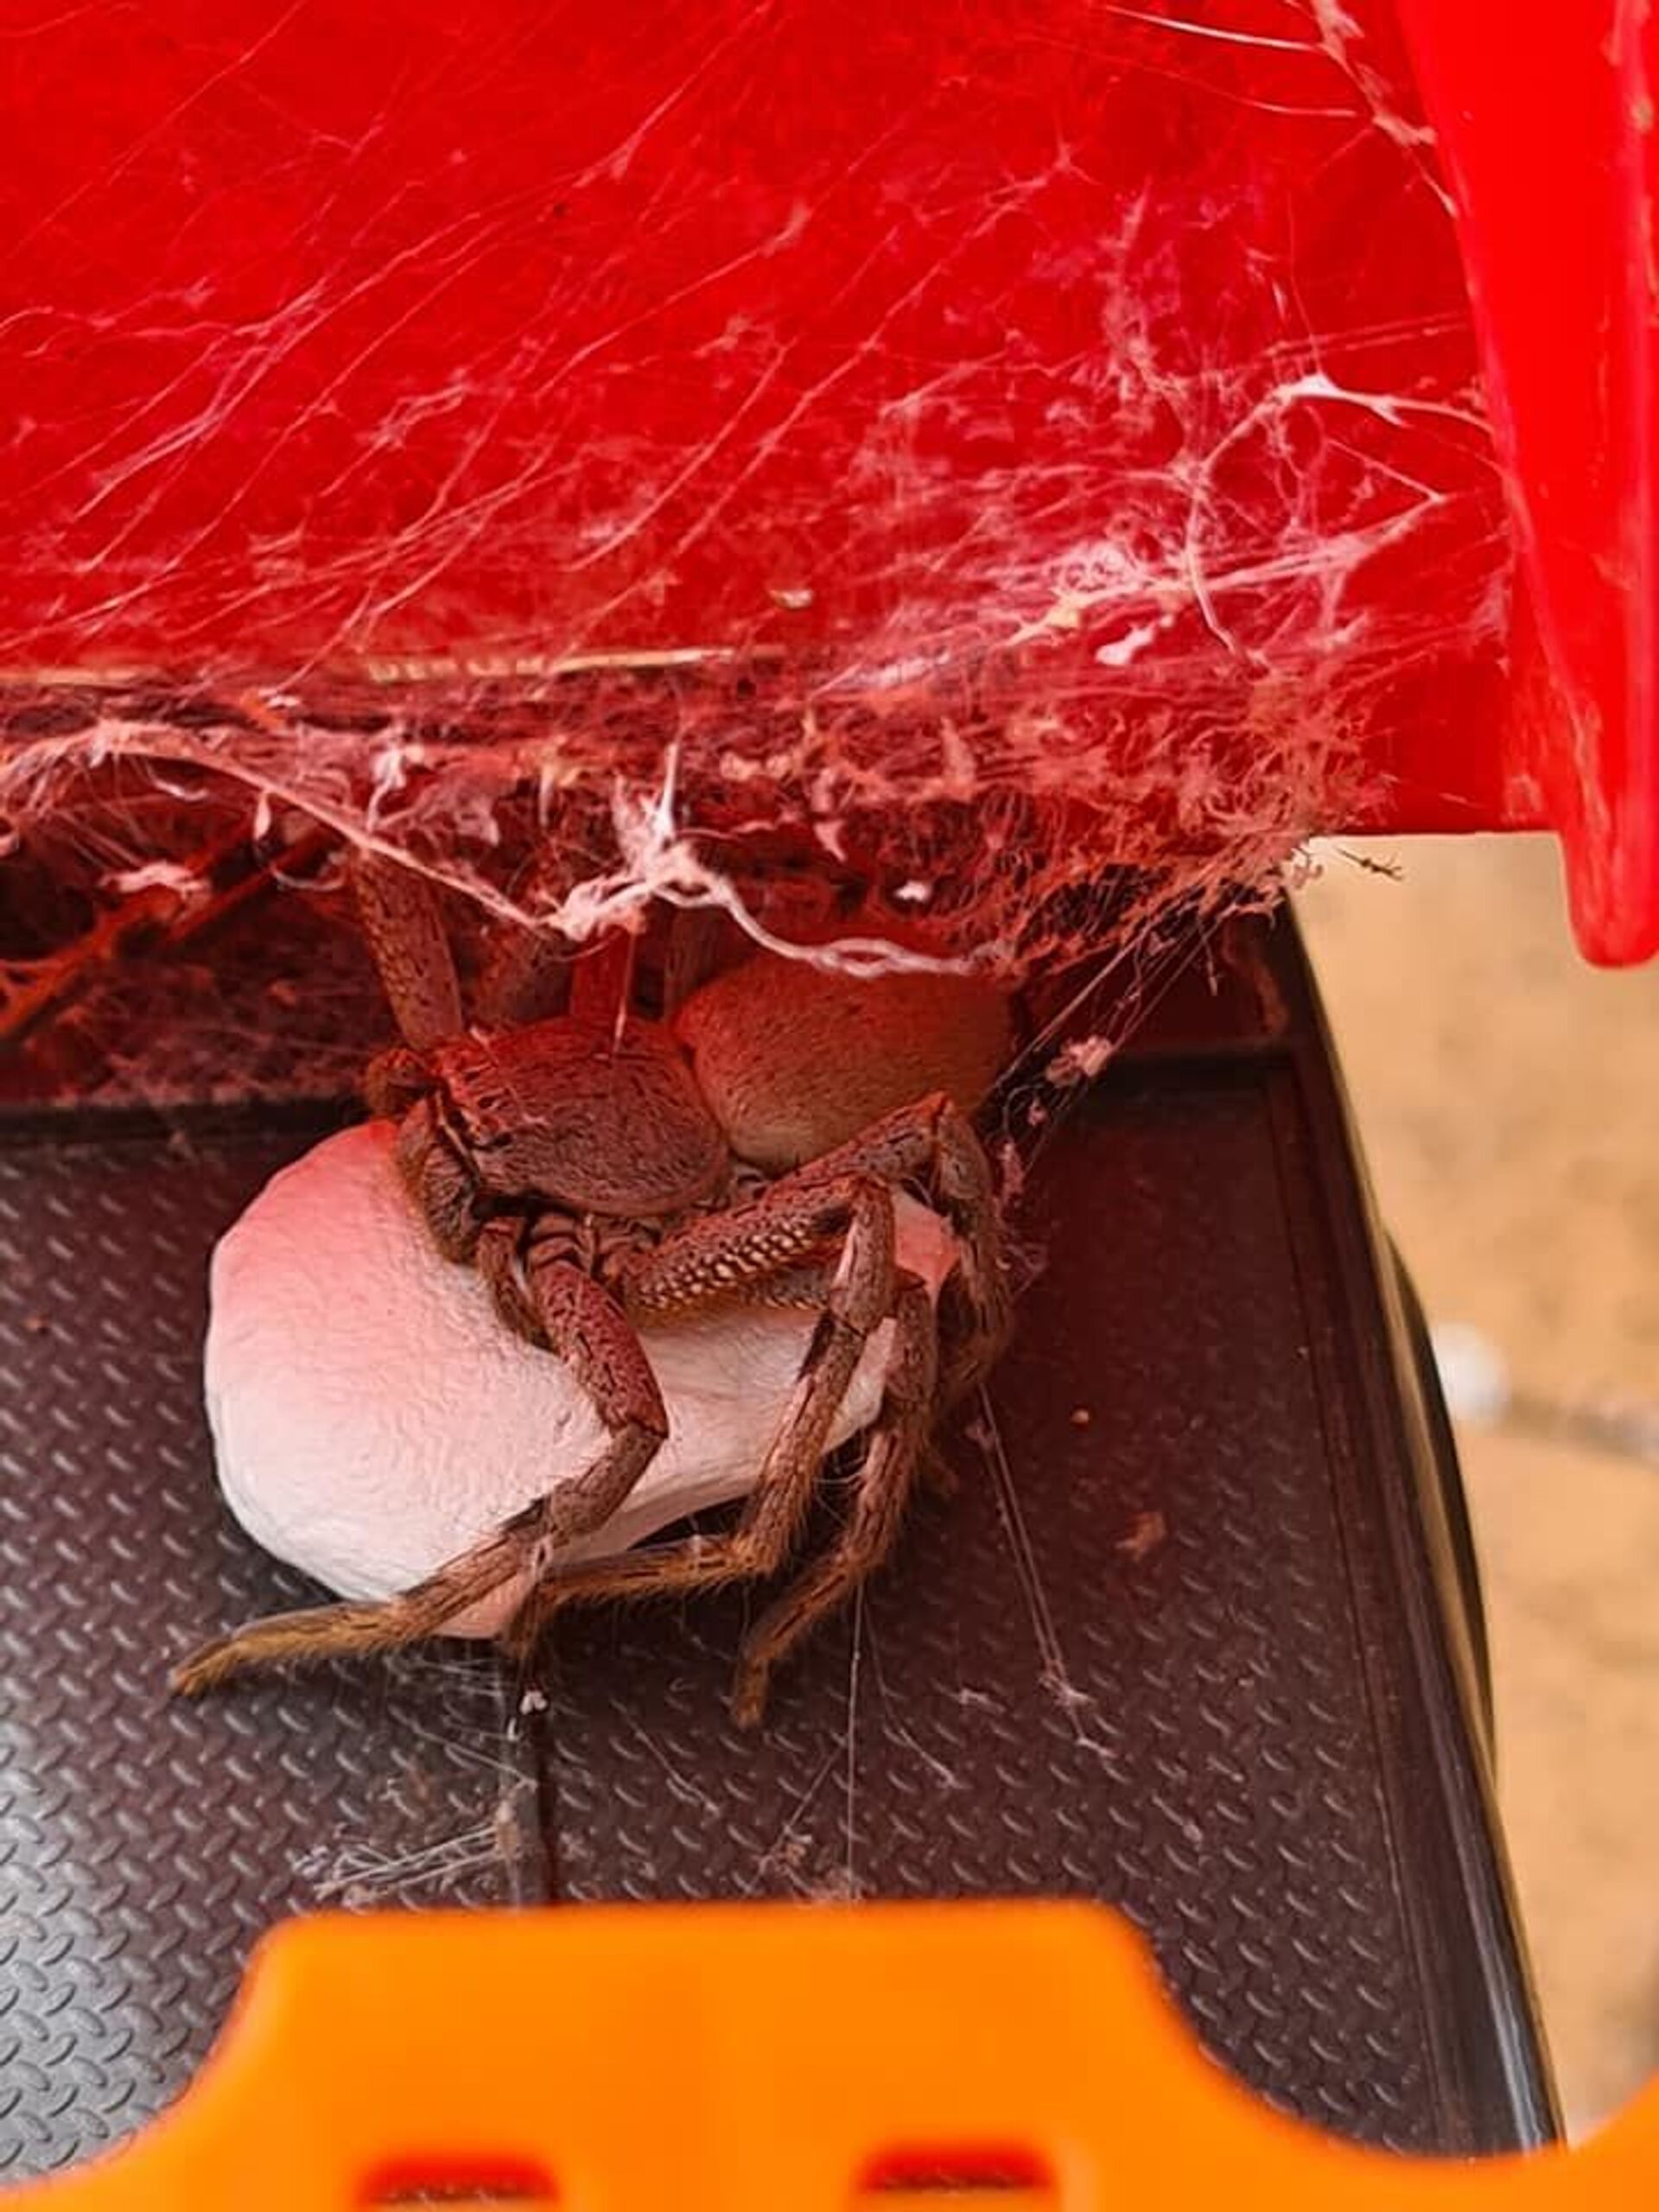 Just Aussie Things: Terrifying Pics of Huge Spider Guarding Egg Sac Inside Toy Truck Emerge Online - Sputnik International, 1920, 12.02.2021